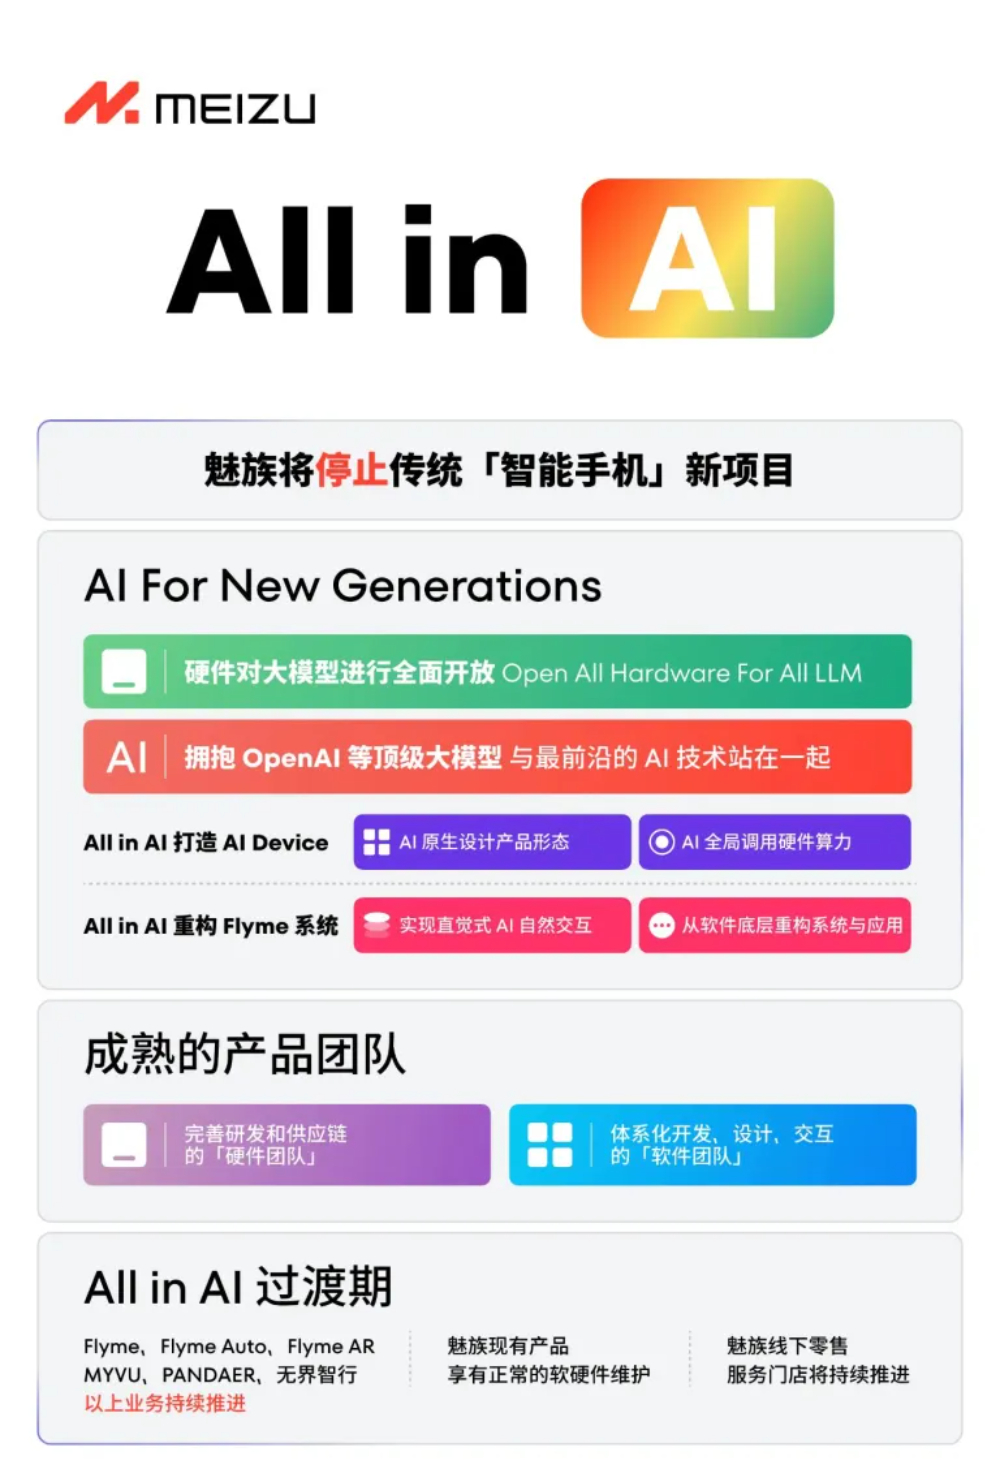 Meizu bỏ sản xuất smartphone, chuyển sang AI - 2 2